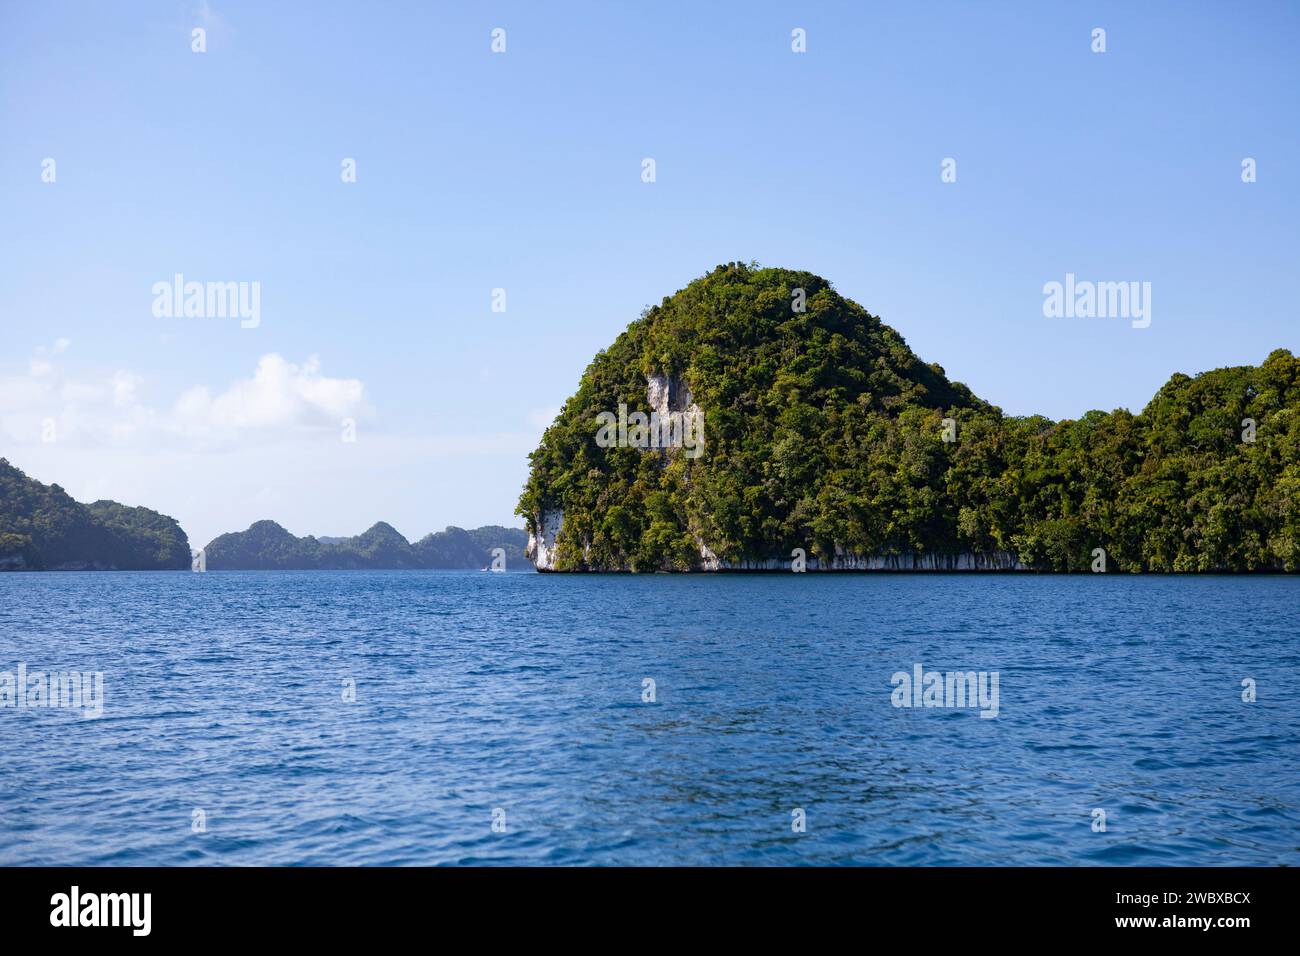 Rock Islands, Palau, Micronesia Stock Photo